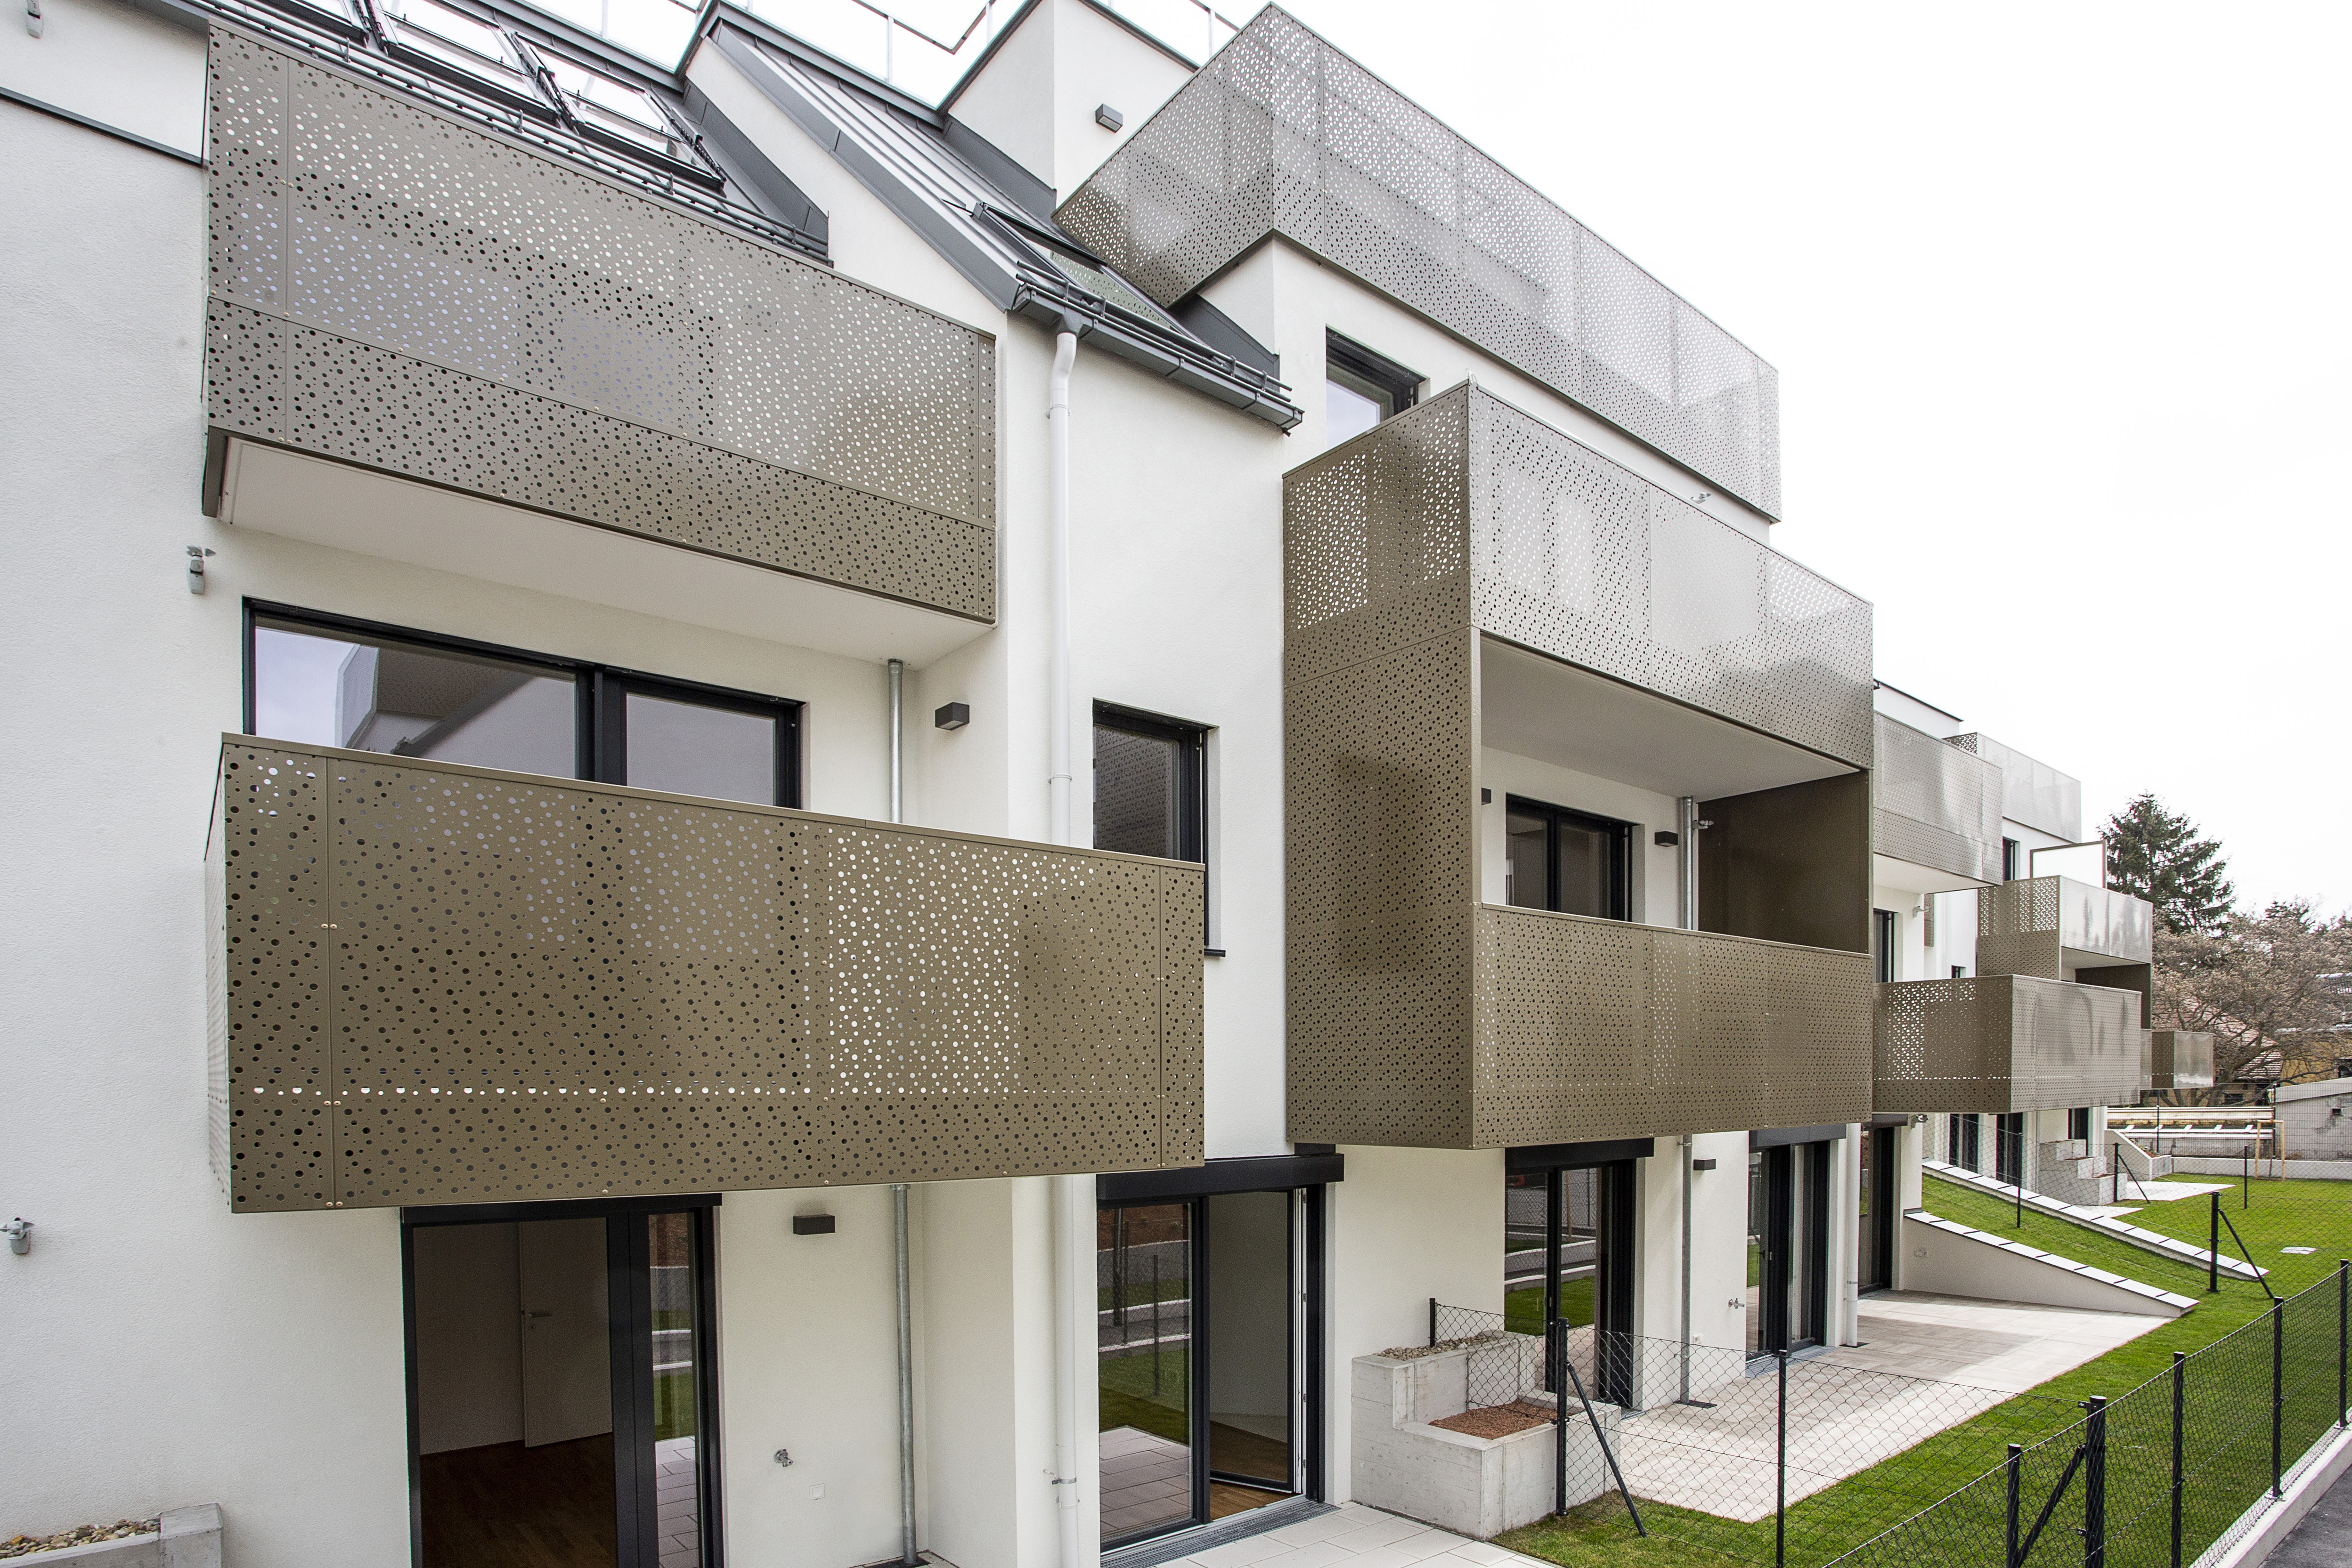 Nauschgasse 4, 1220 Wien - Real estate project development